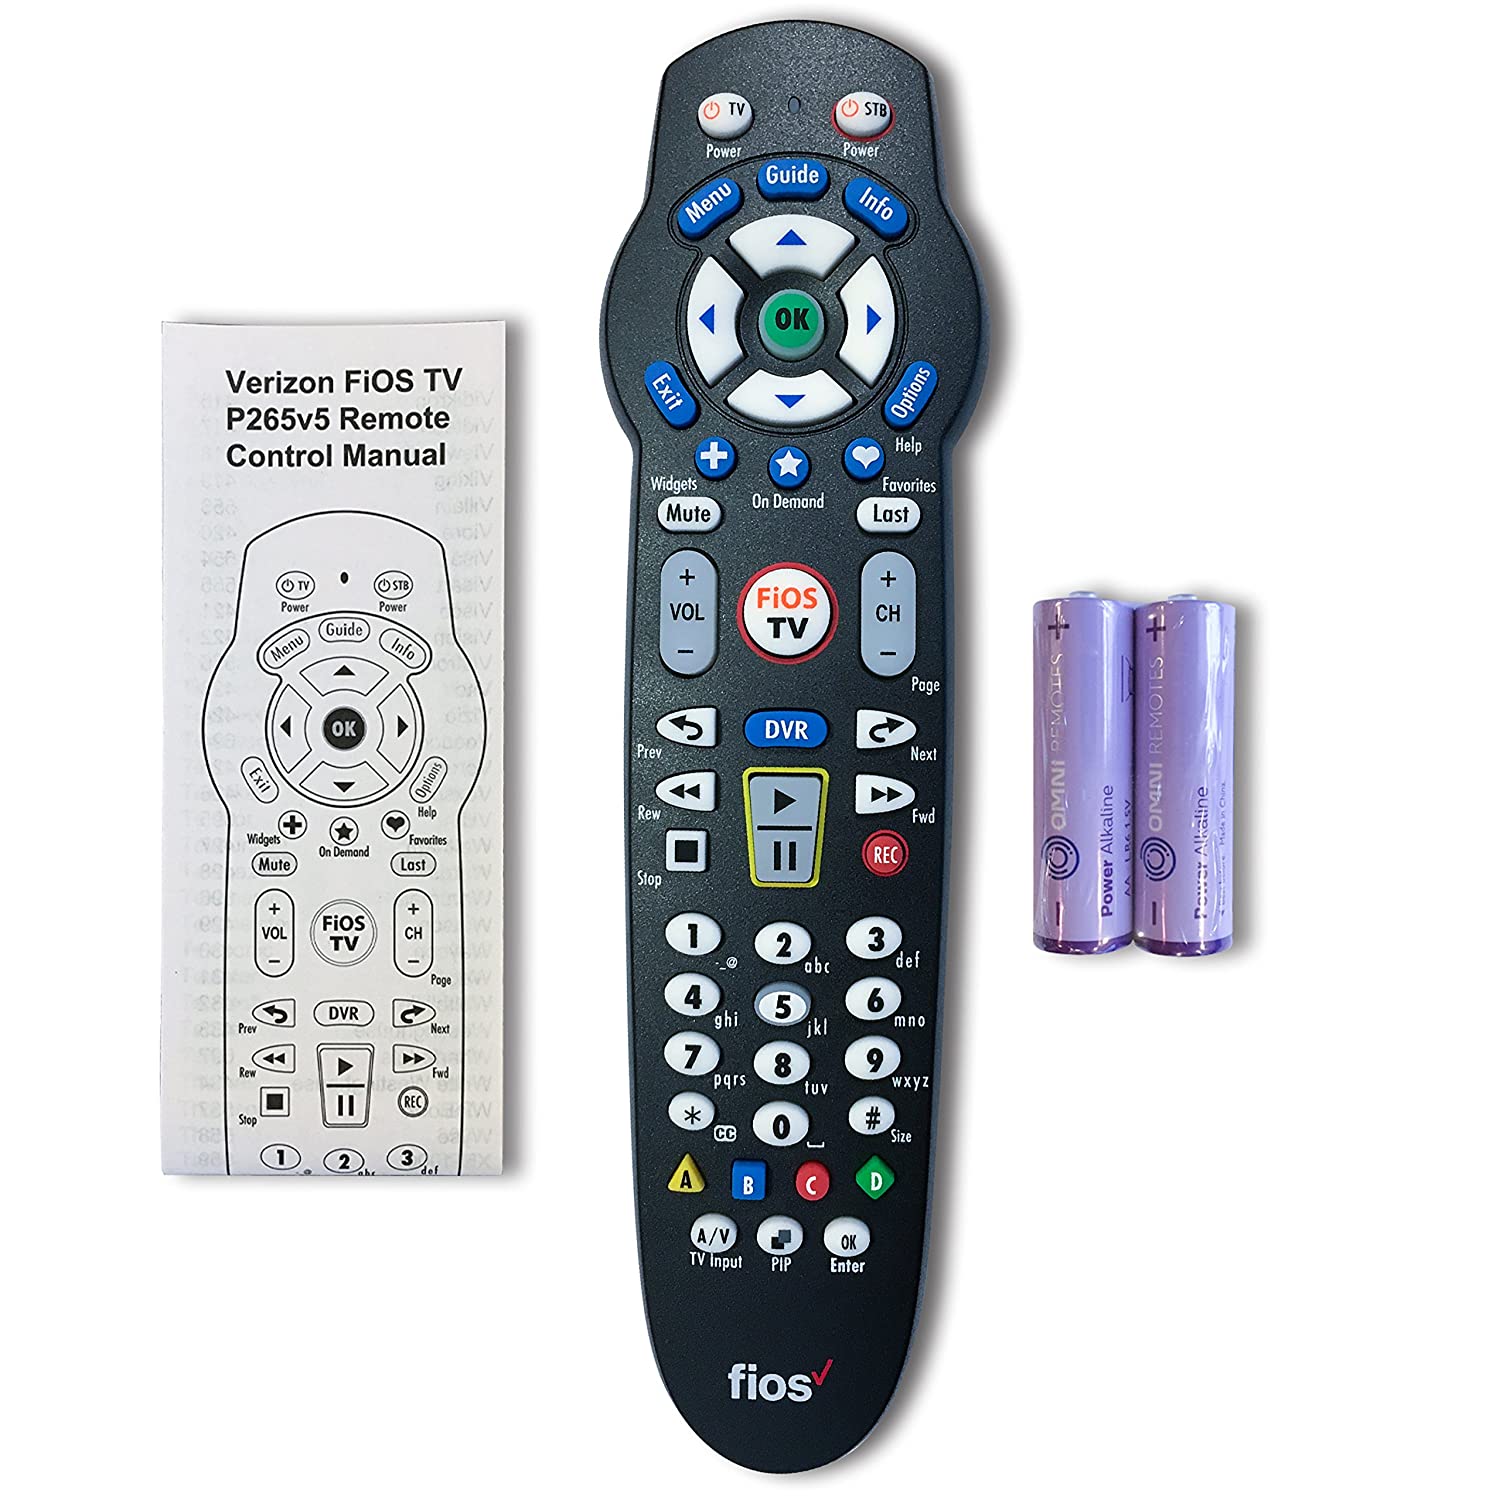 Verizon FiOS TV Replacement Remote Control